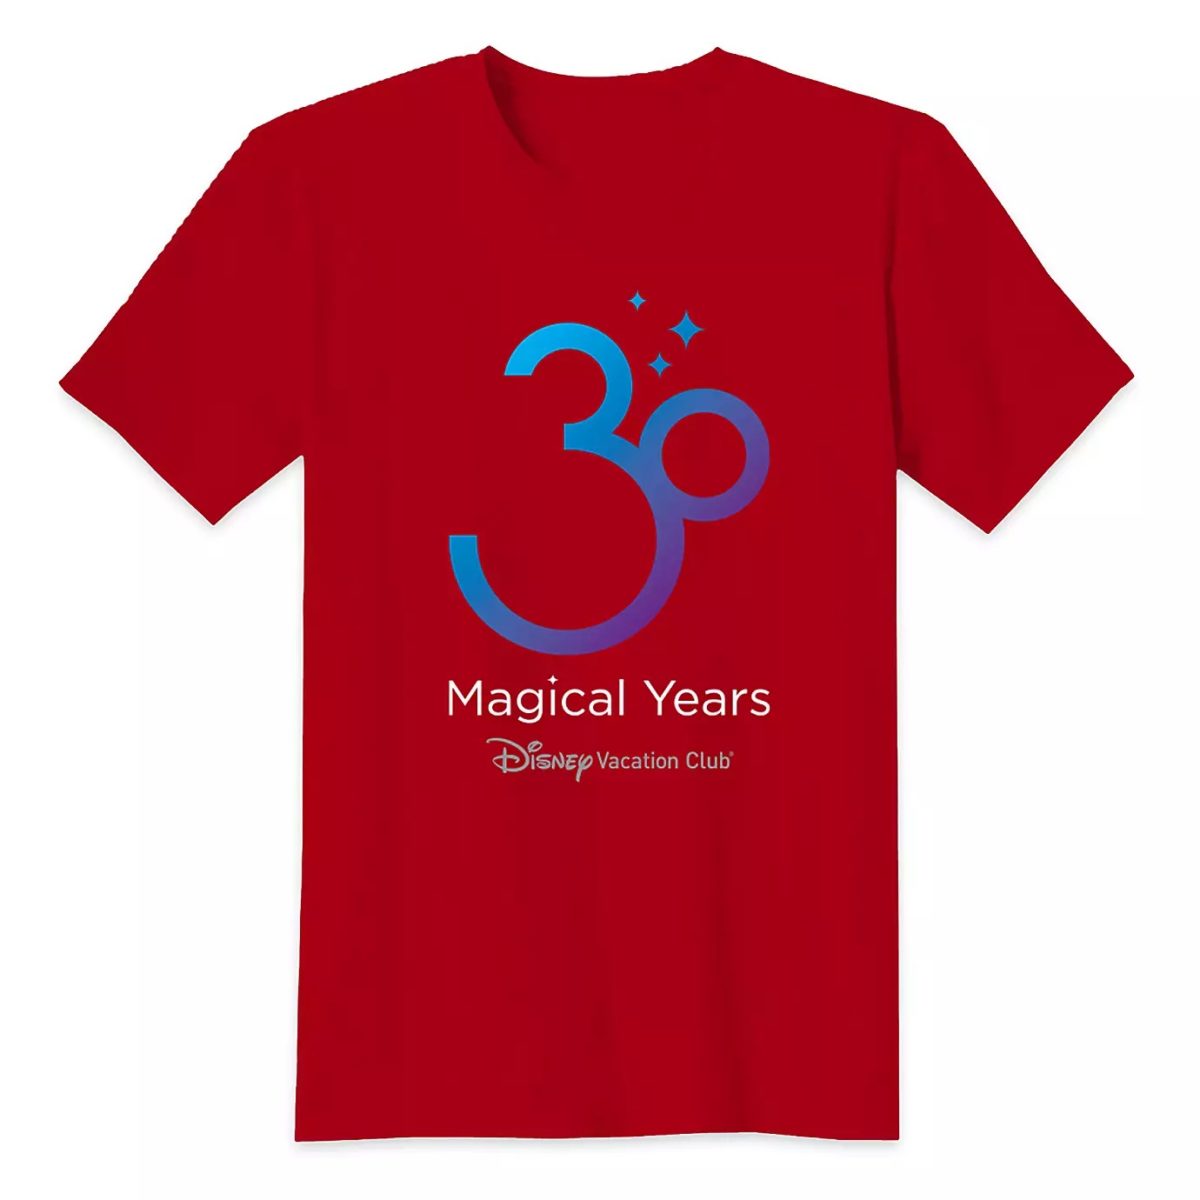 dvc-30th-anniversary-t-shirt-red-6800283